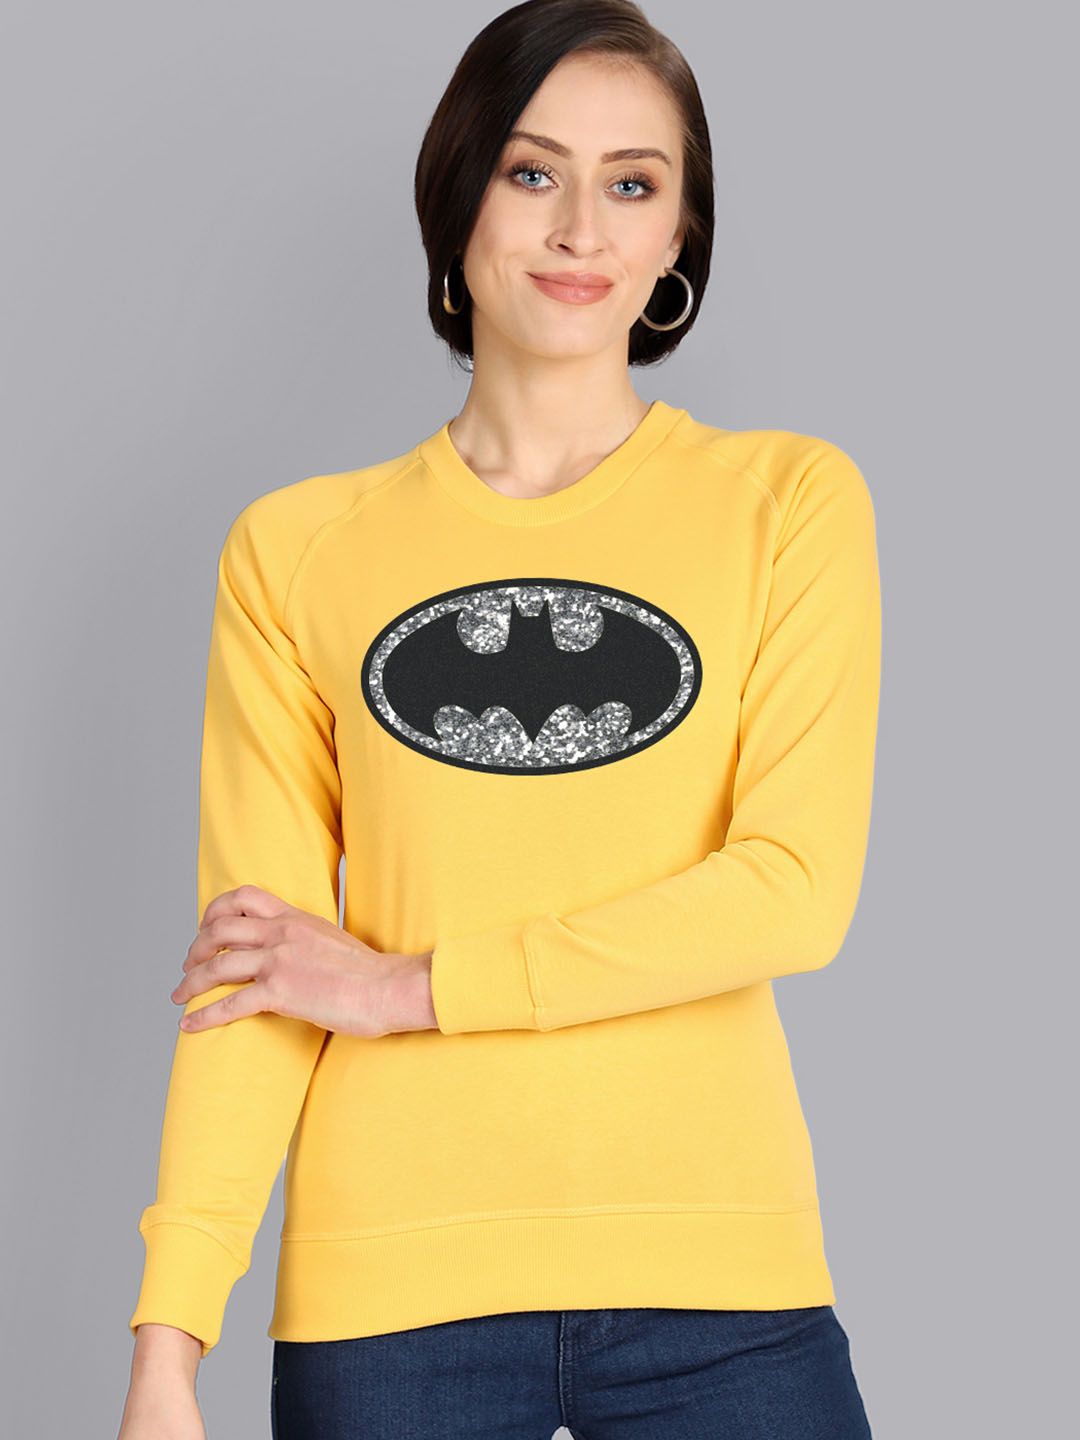 Free Authority Women Yellow & Black Batman Printed Sweatshirt Price in India